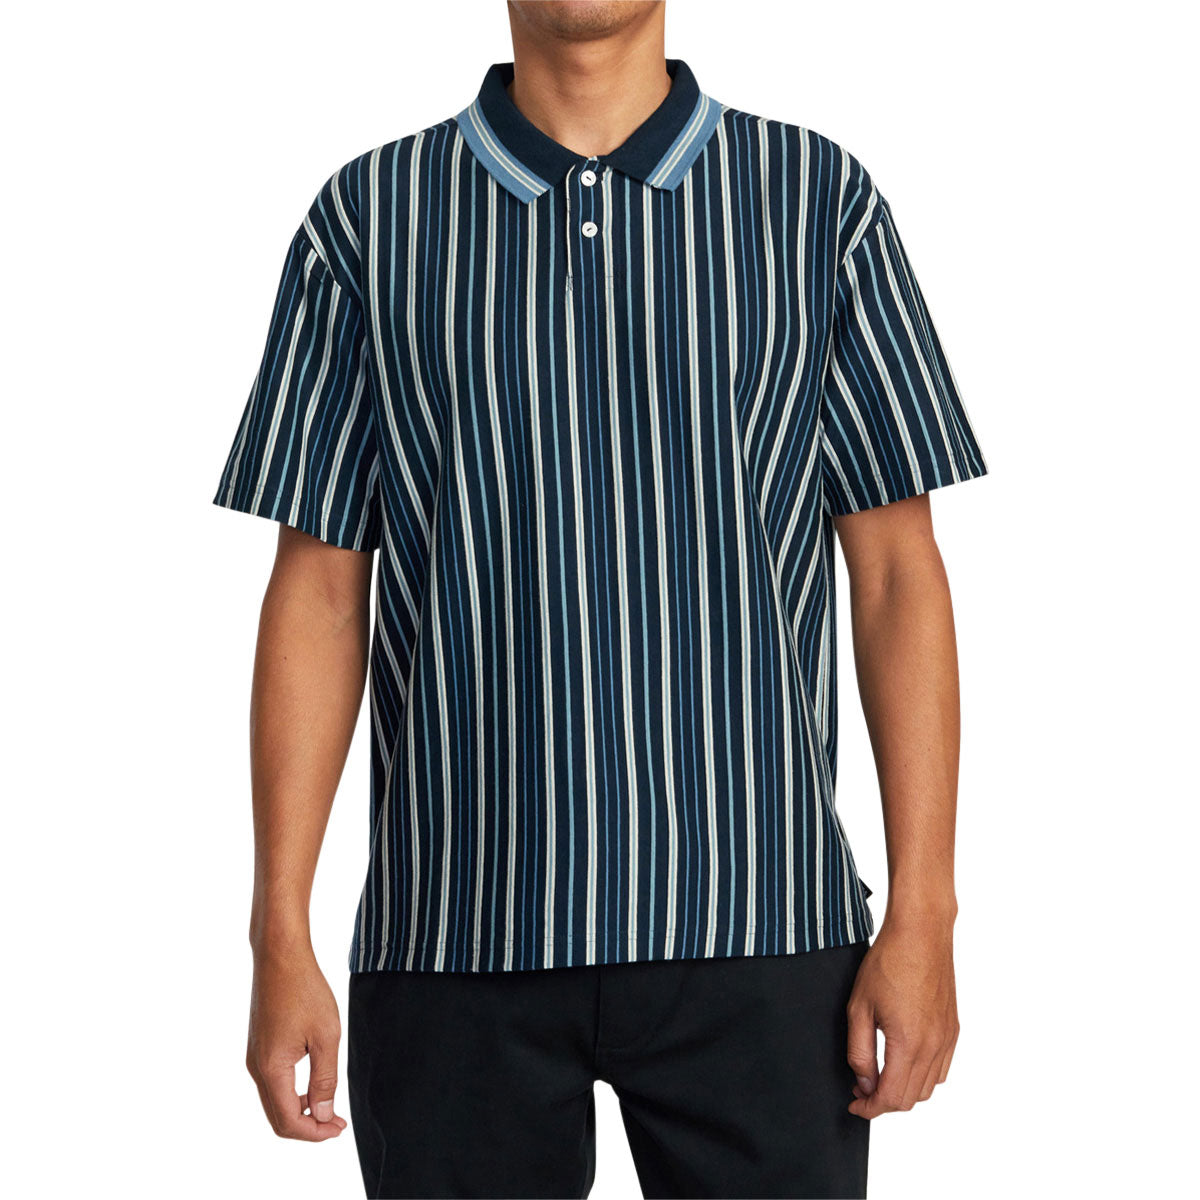 RVCA Uptown Stripe Polo Shirt - Moody Blue image 1